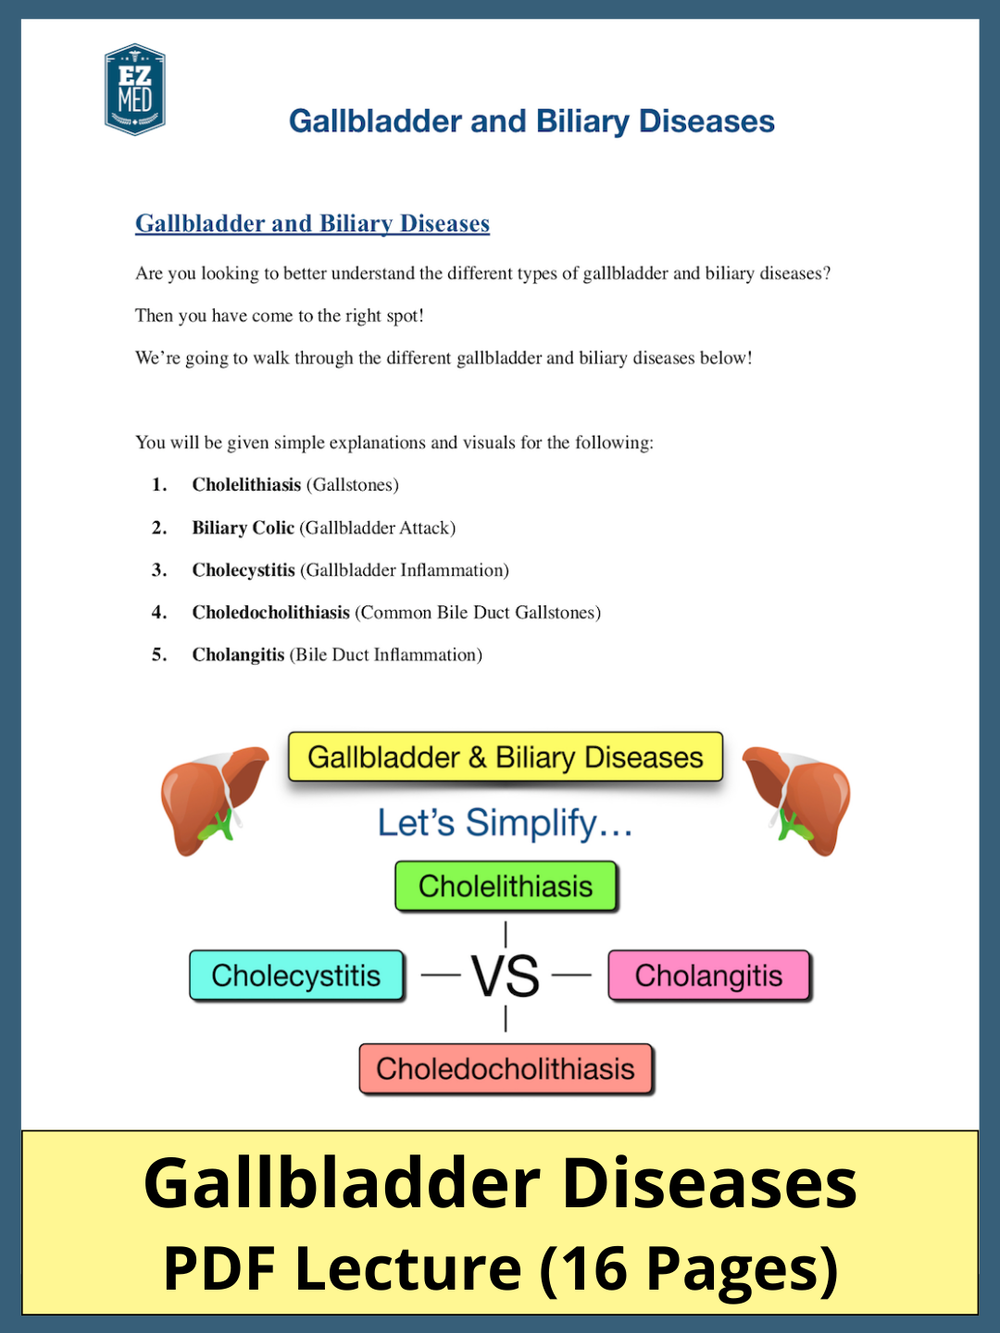 cholelithiasis vs cholecystitis vs choledocholithiasis vs cholangitis; gallbladder biliary gallstone diseases